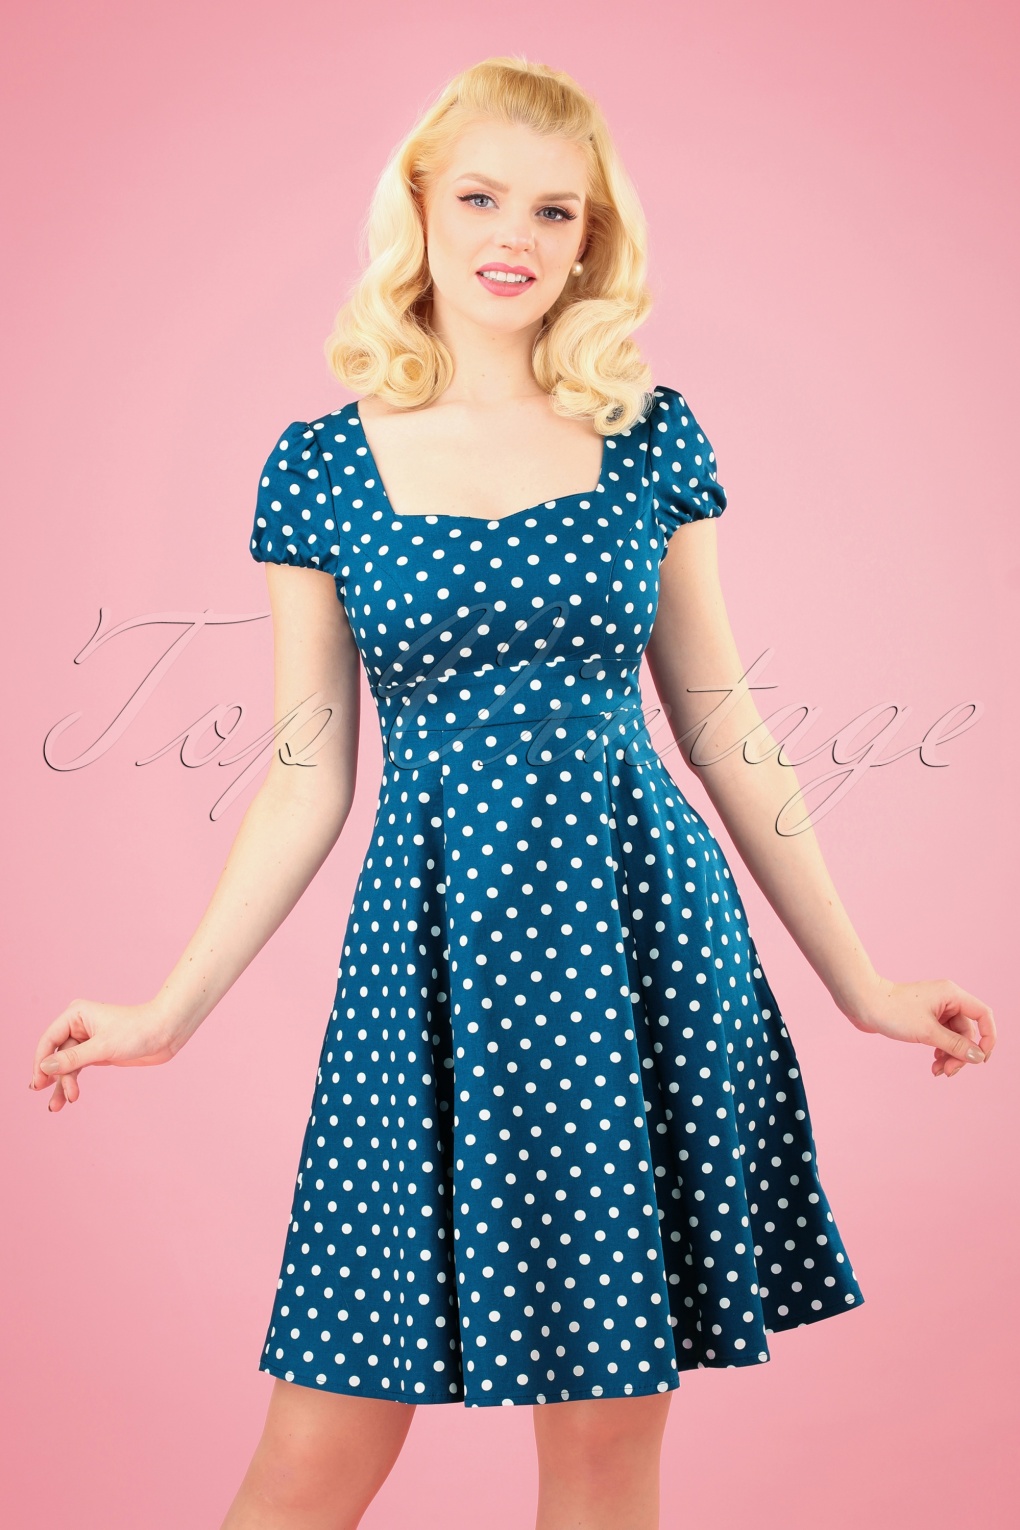 Vintage Polka Dot Dresses - 50s Spotty and Ditsy Prints